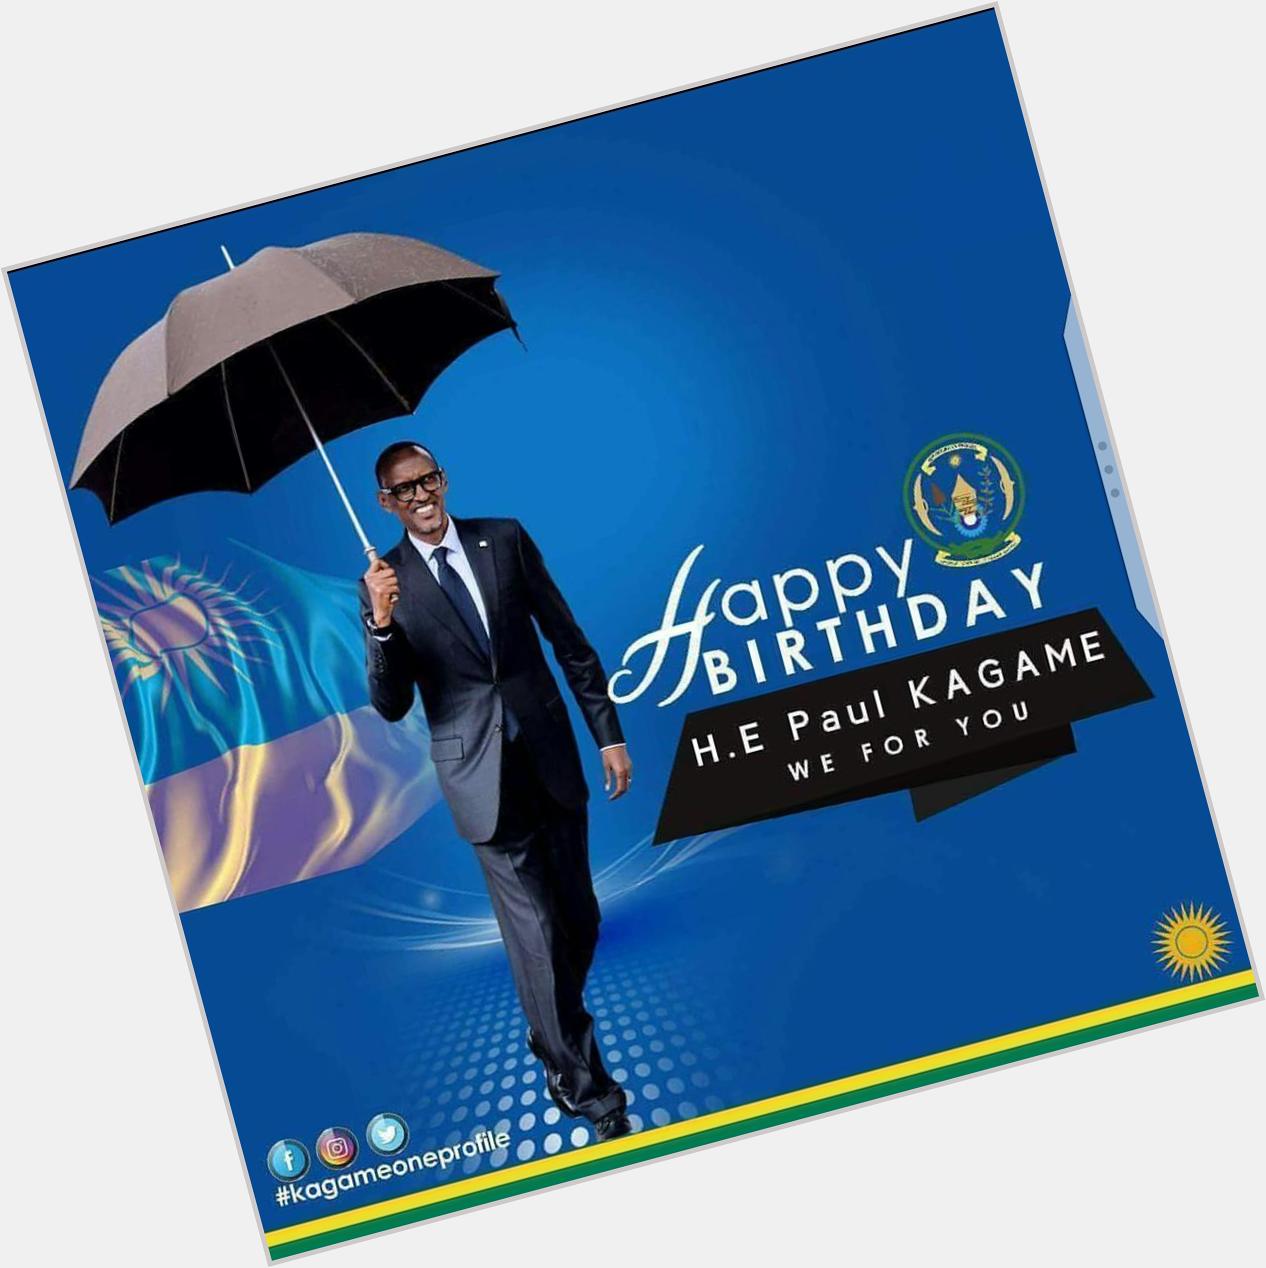 Happy birthday # Paul Kagame wacu turakwemera 